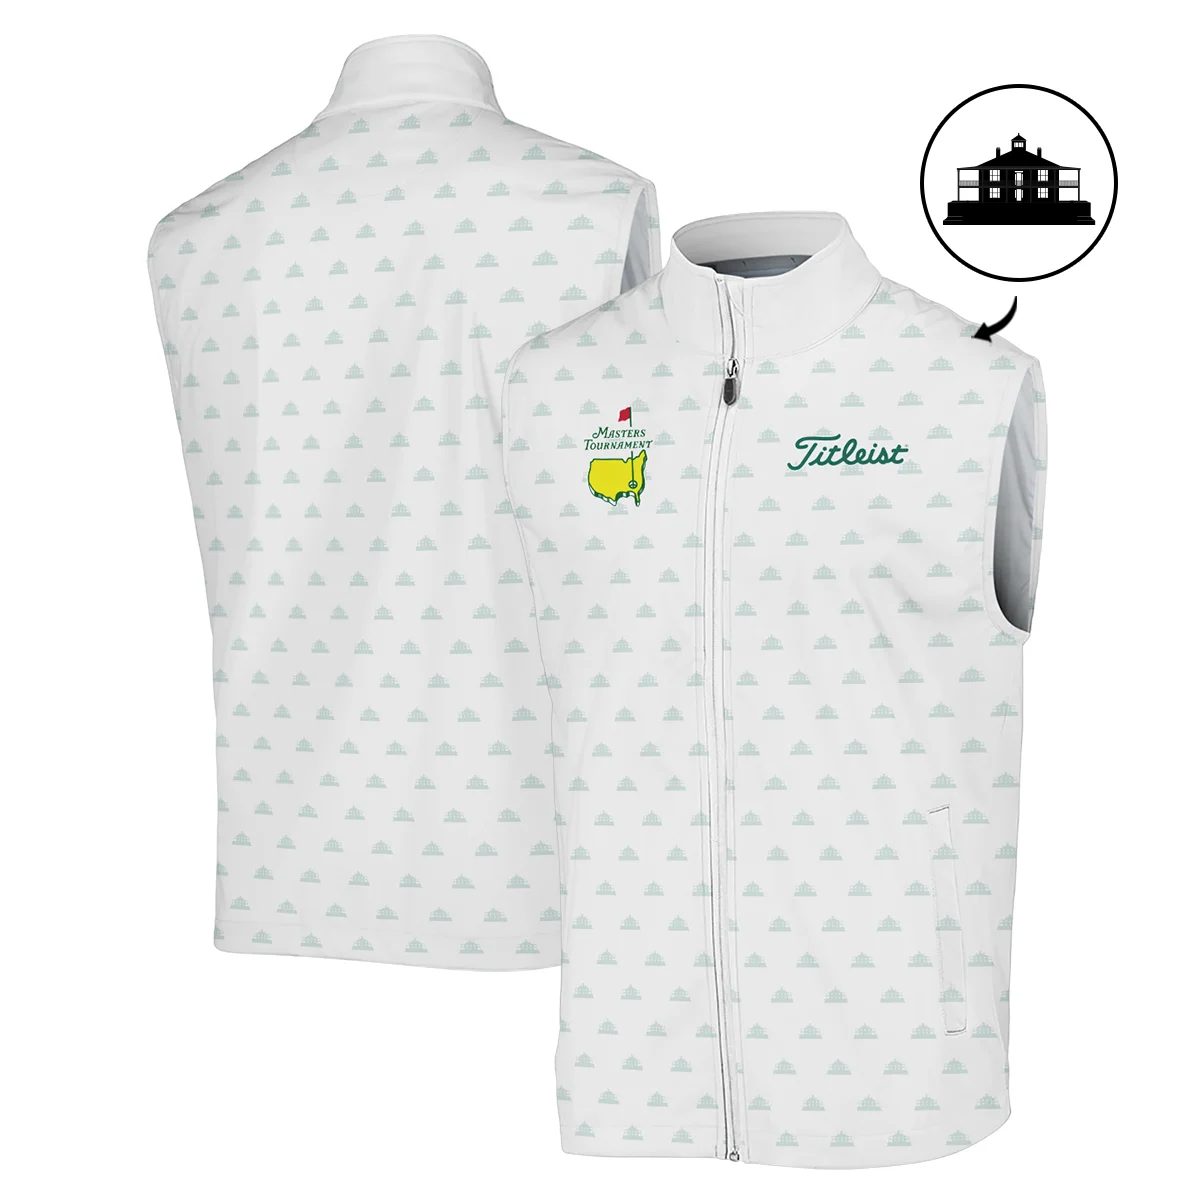 Masters Tournament Golf Sport Titleist Sleeveless Jacket Sports Cup Pattern White Green Sleeveless Jacket